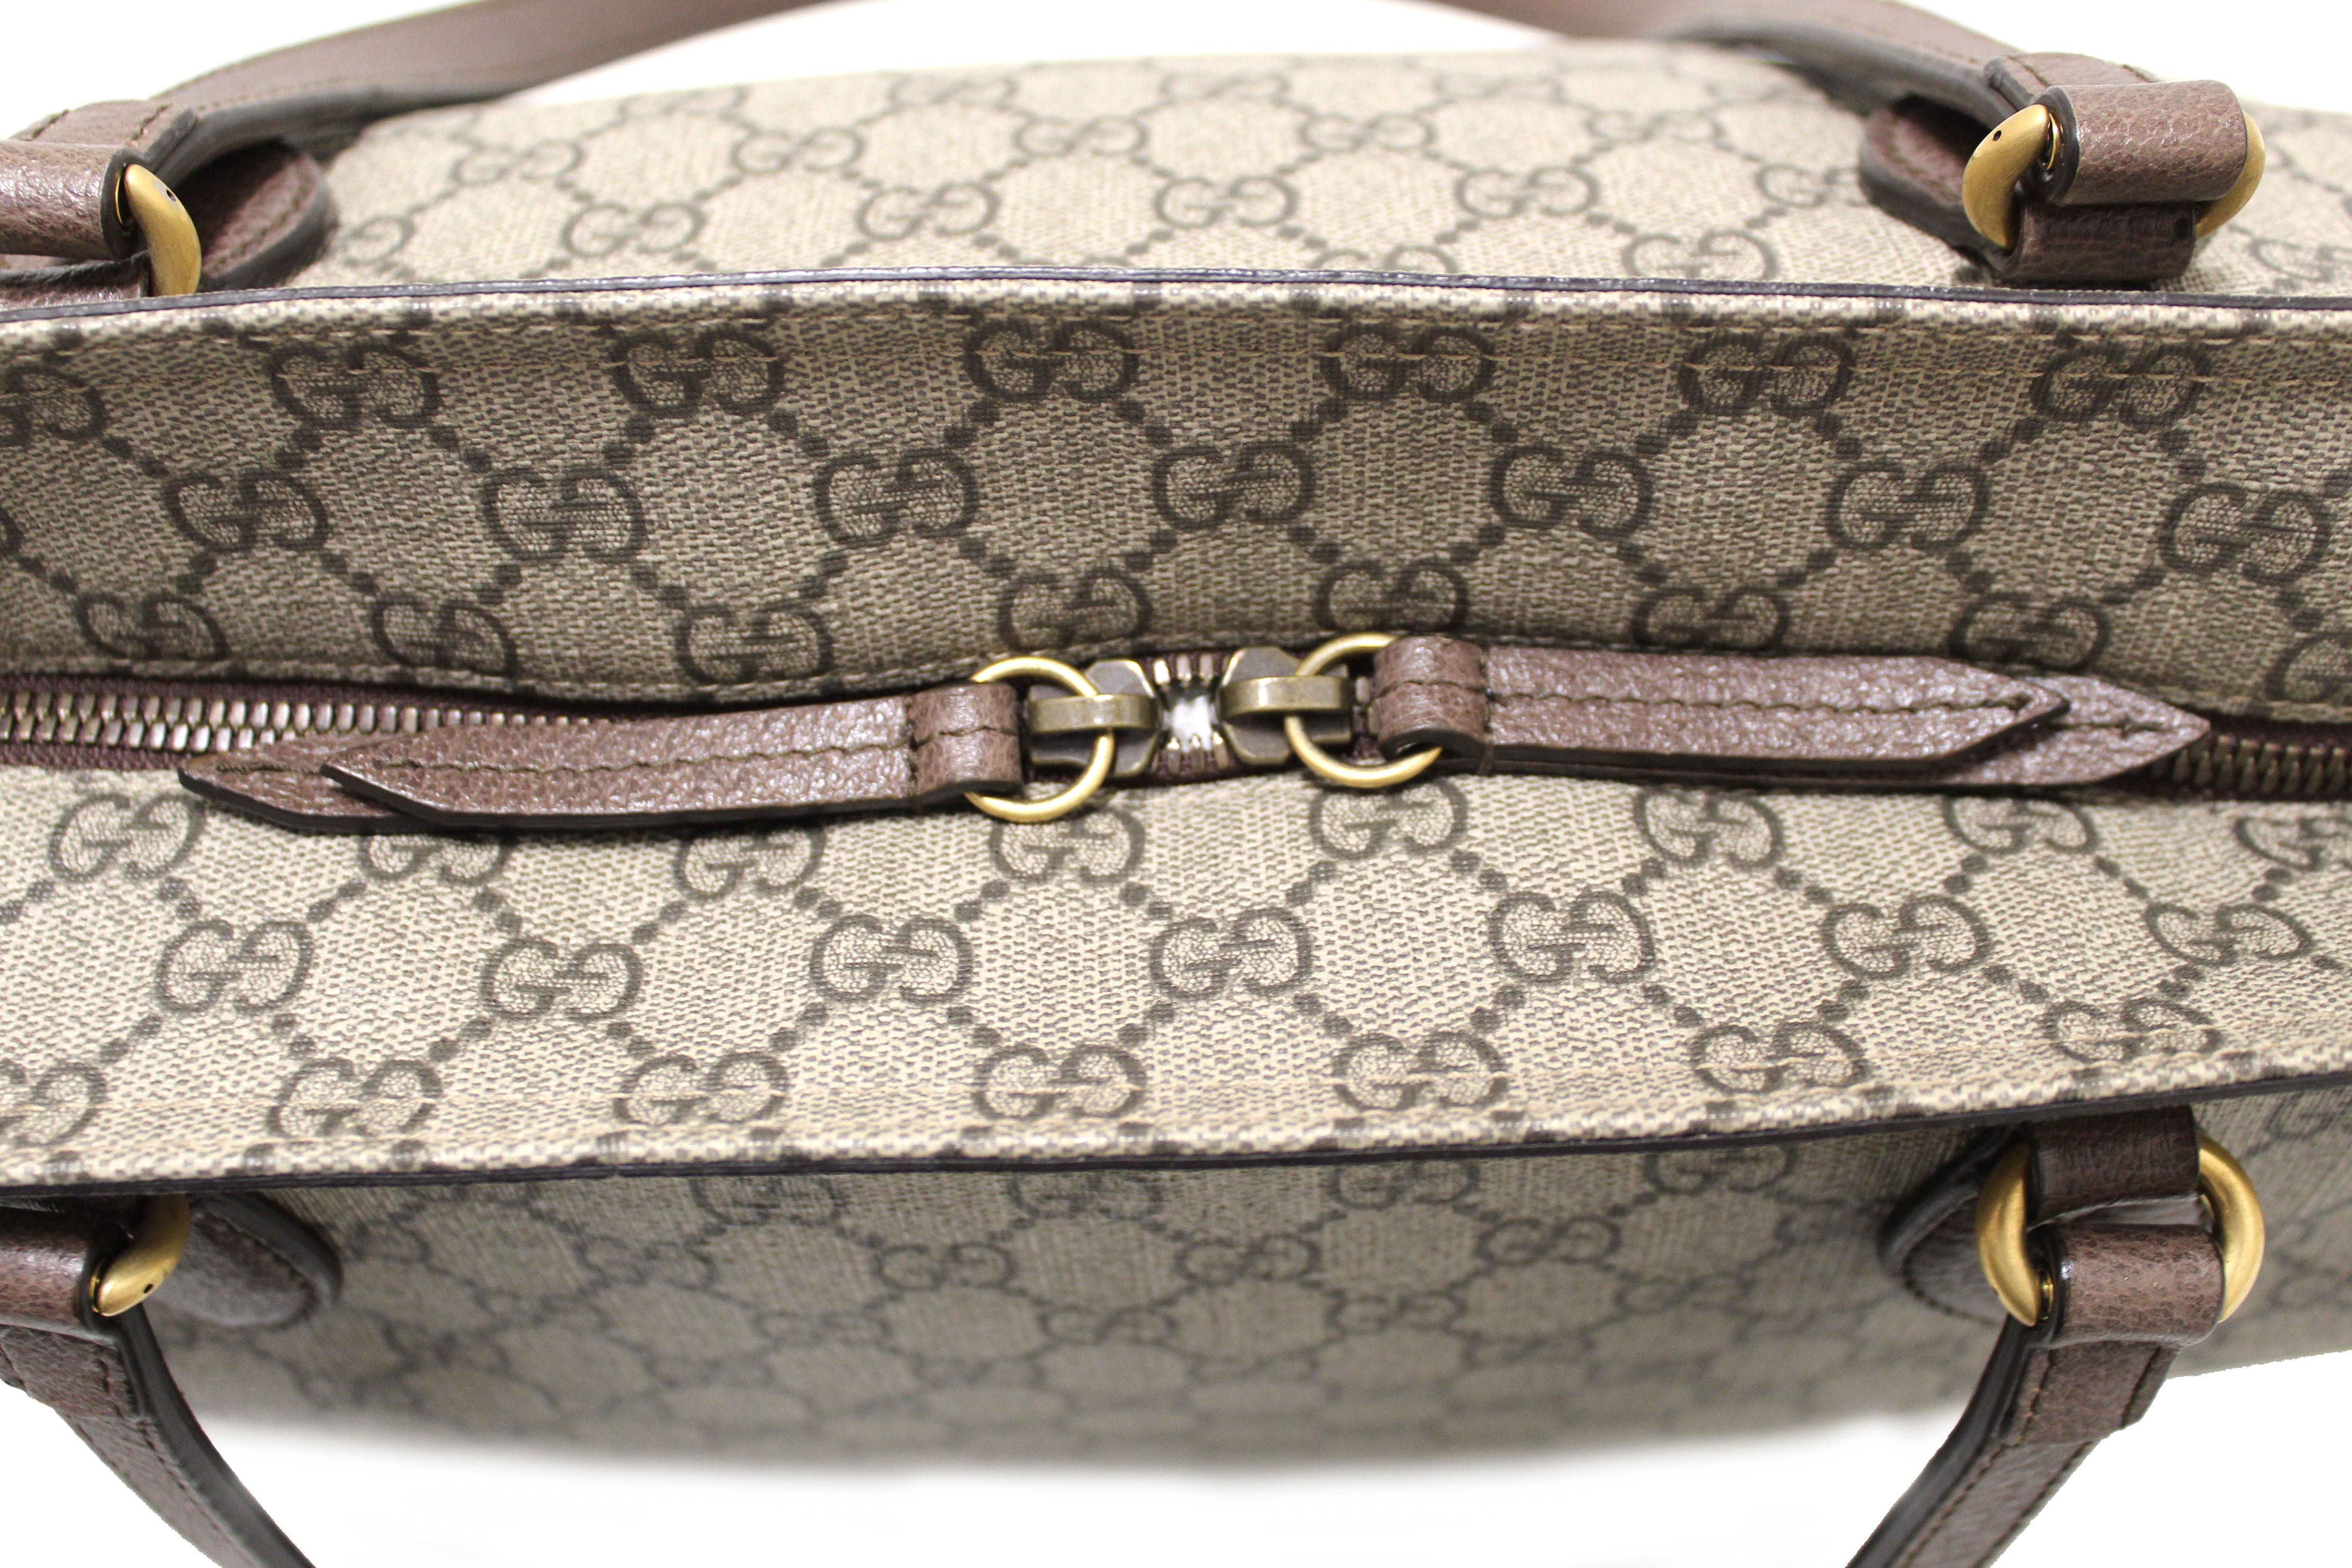 Gucci Beige/Brown GG Supreme Canvas and Patent Leather Boston Bag